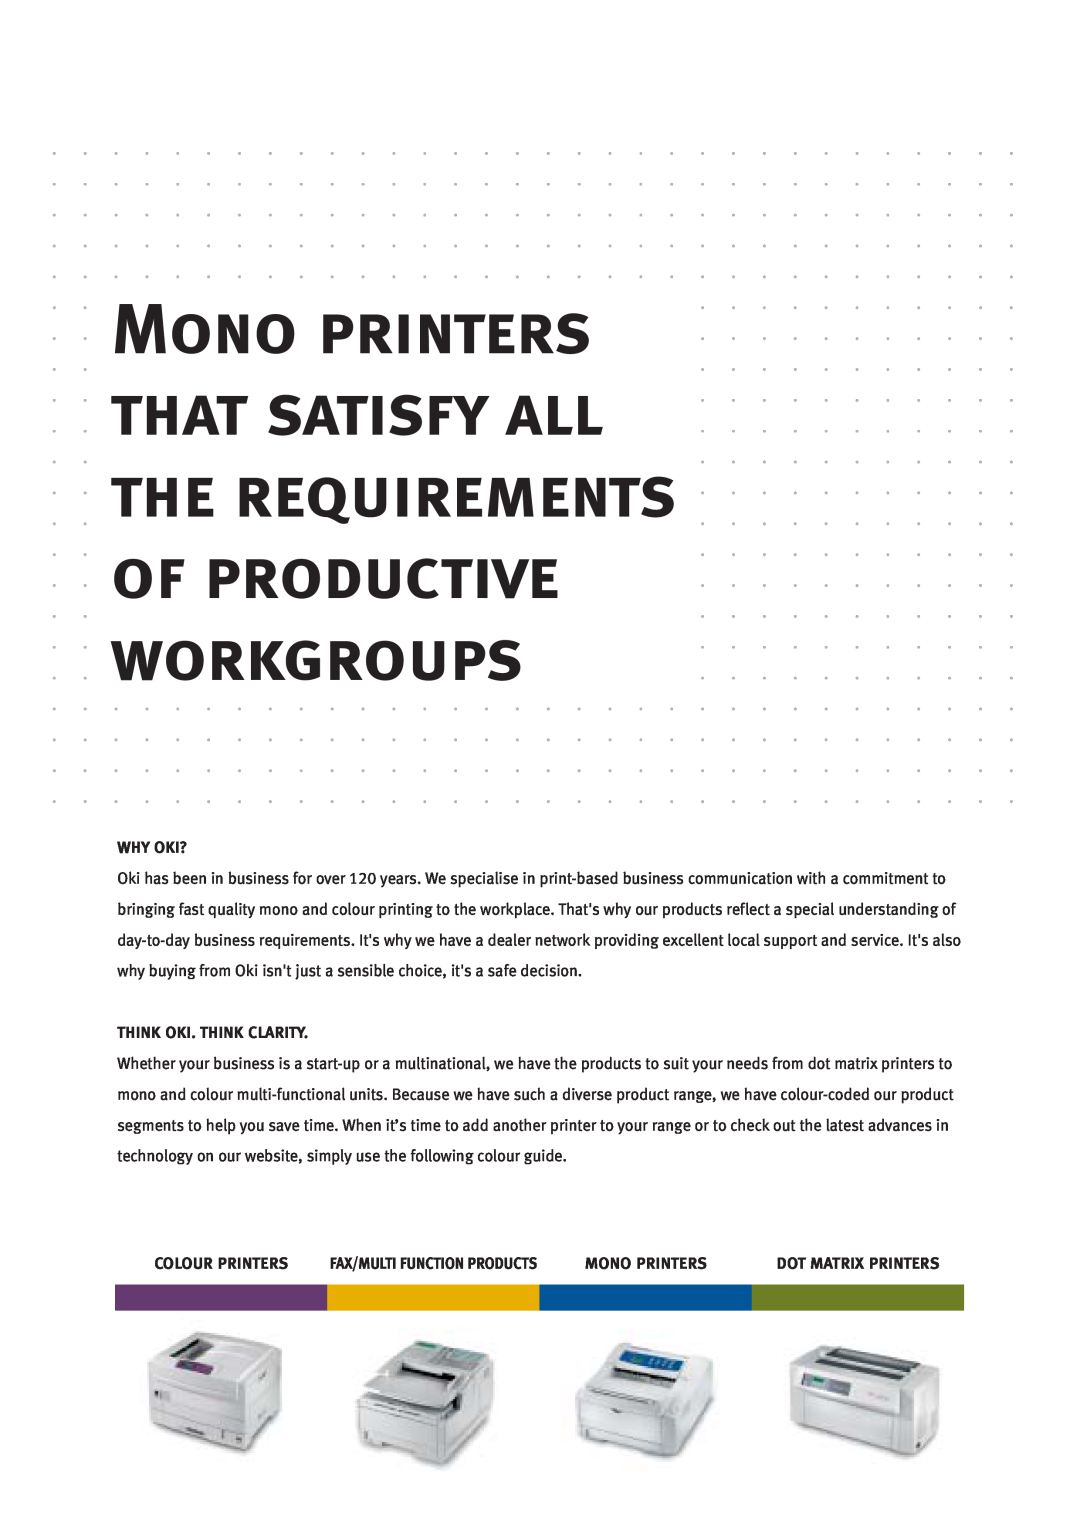 Oki B6000 manual Why Oki?, Think Oki. Think Clarity, Colour Printers, Mono Printers, Dot Matrix Printers 